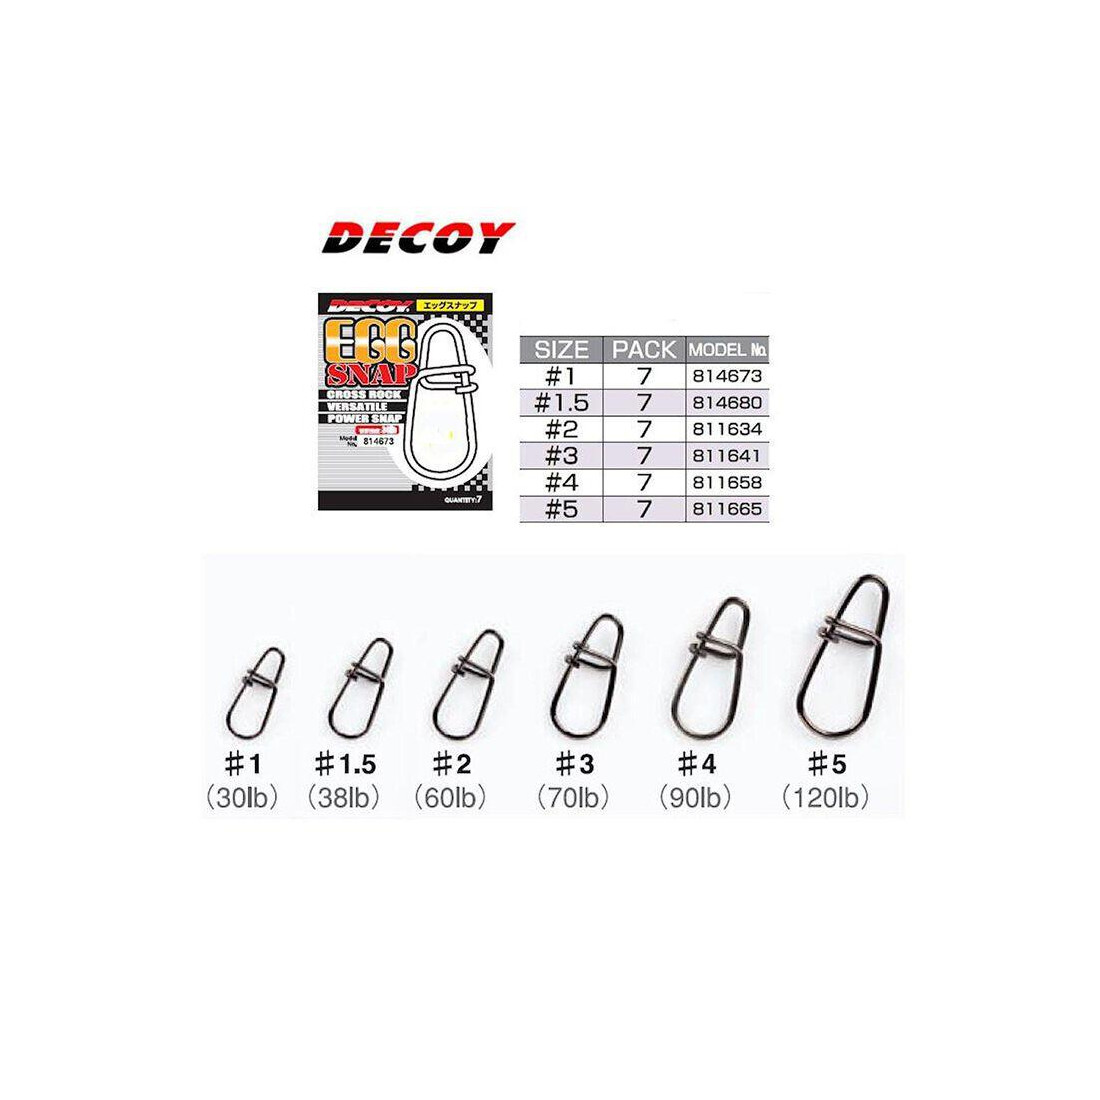 Decoy SN-3 Egg Snap Powerful Cross Lock Snap Size 3 1641 